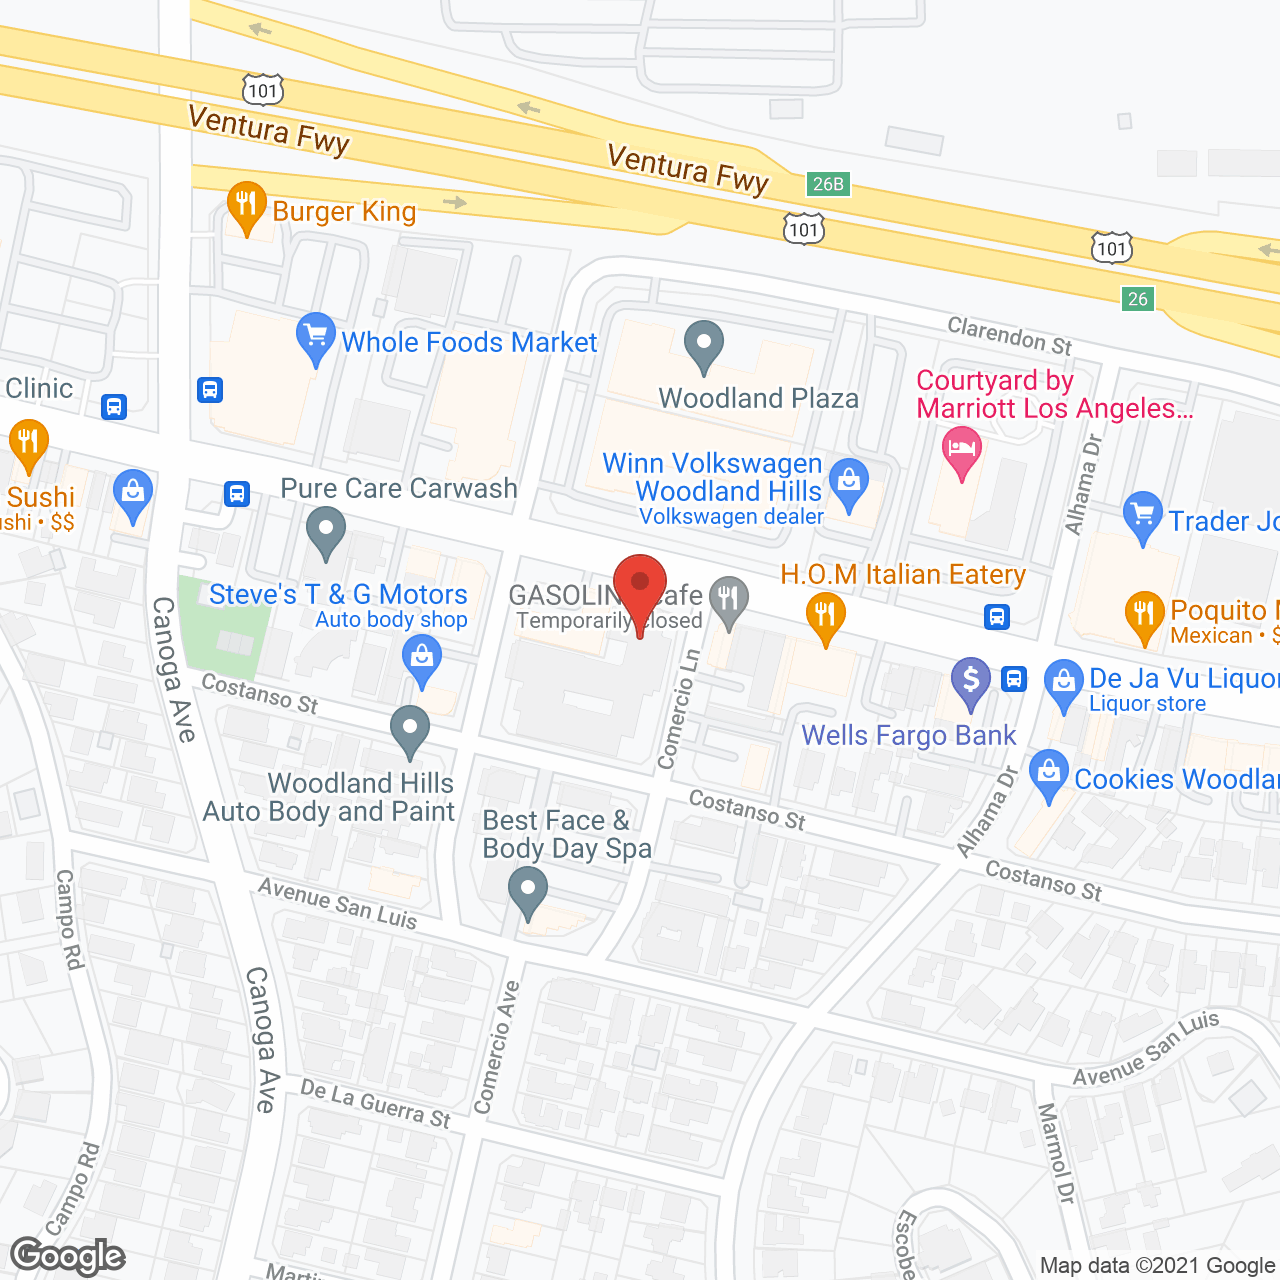 Park Ventura in google map